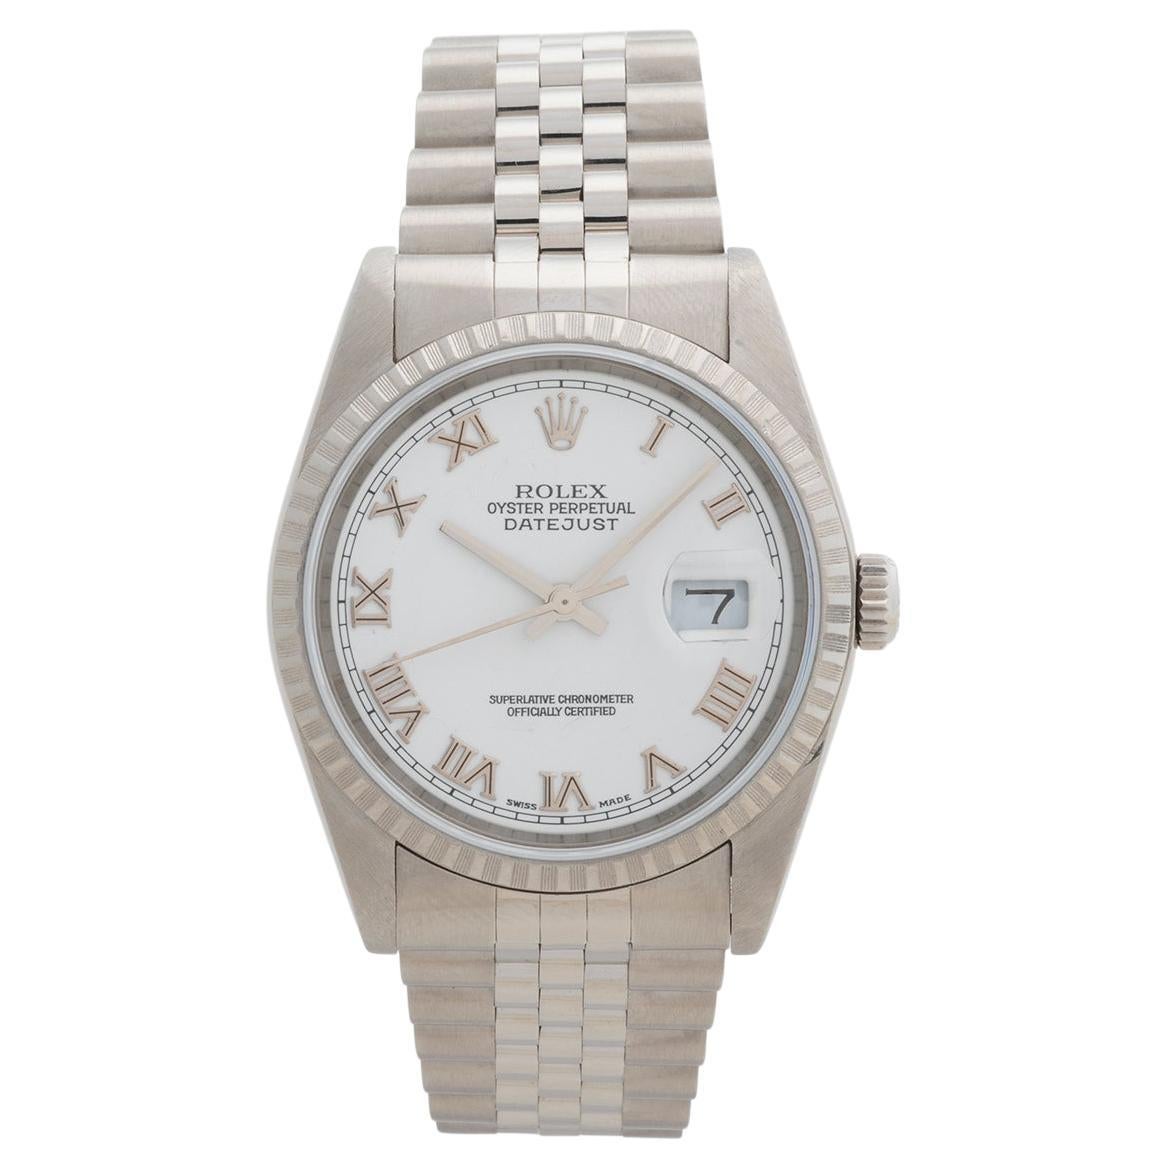 Rolex Datejust Wristwatch Ref 16220, Roman Numeral Dial. Unusual Provenance. For Sale